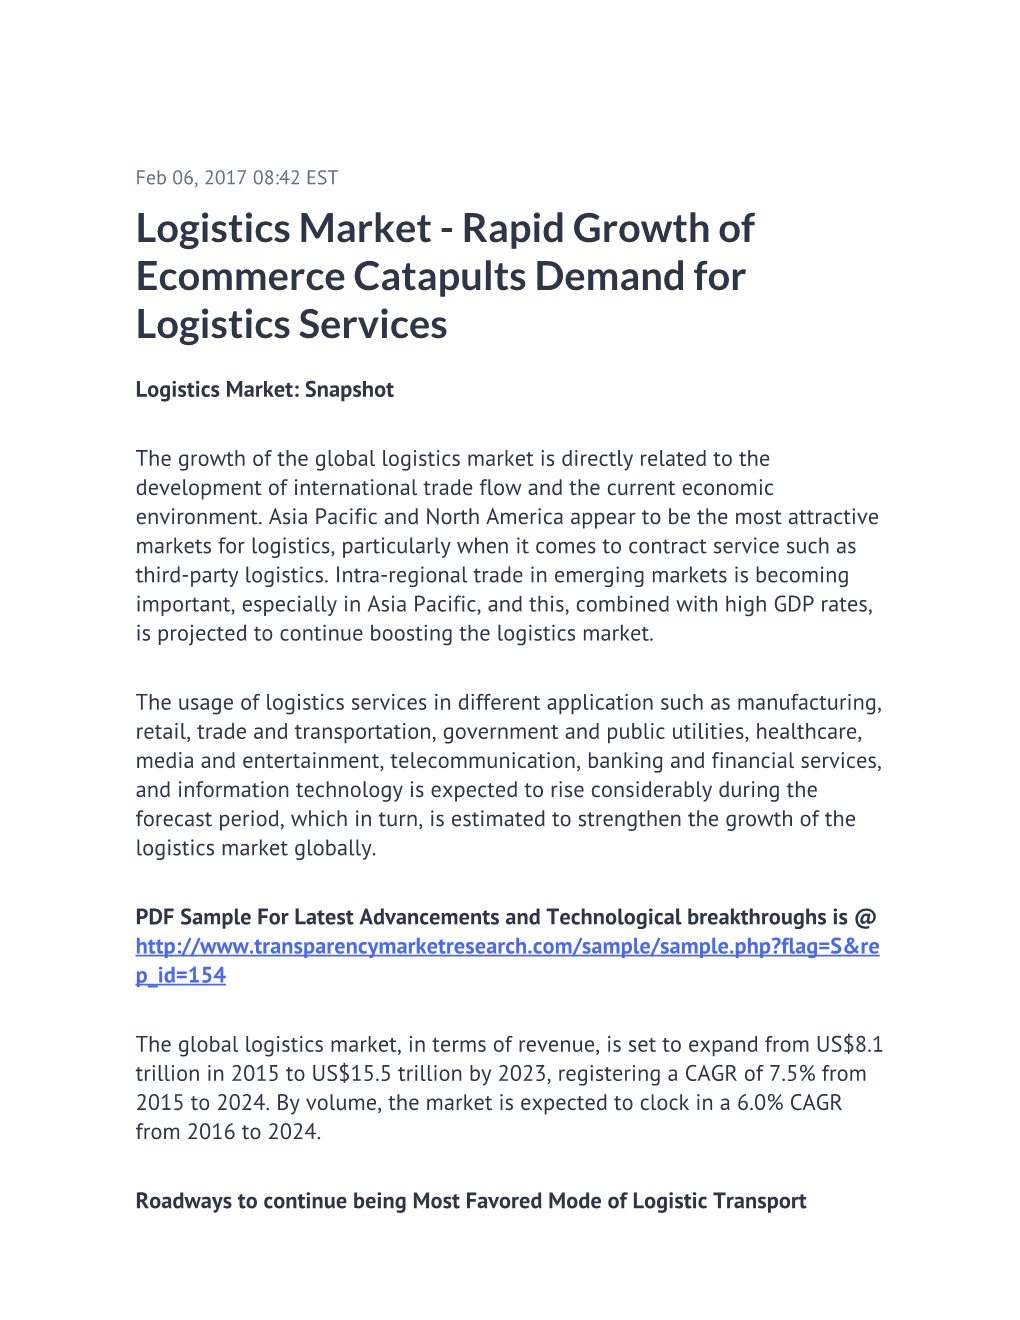 Logistics Market - Rapid Growth of Ecommerce Catapults Demand for Logistics Services